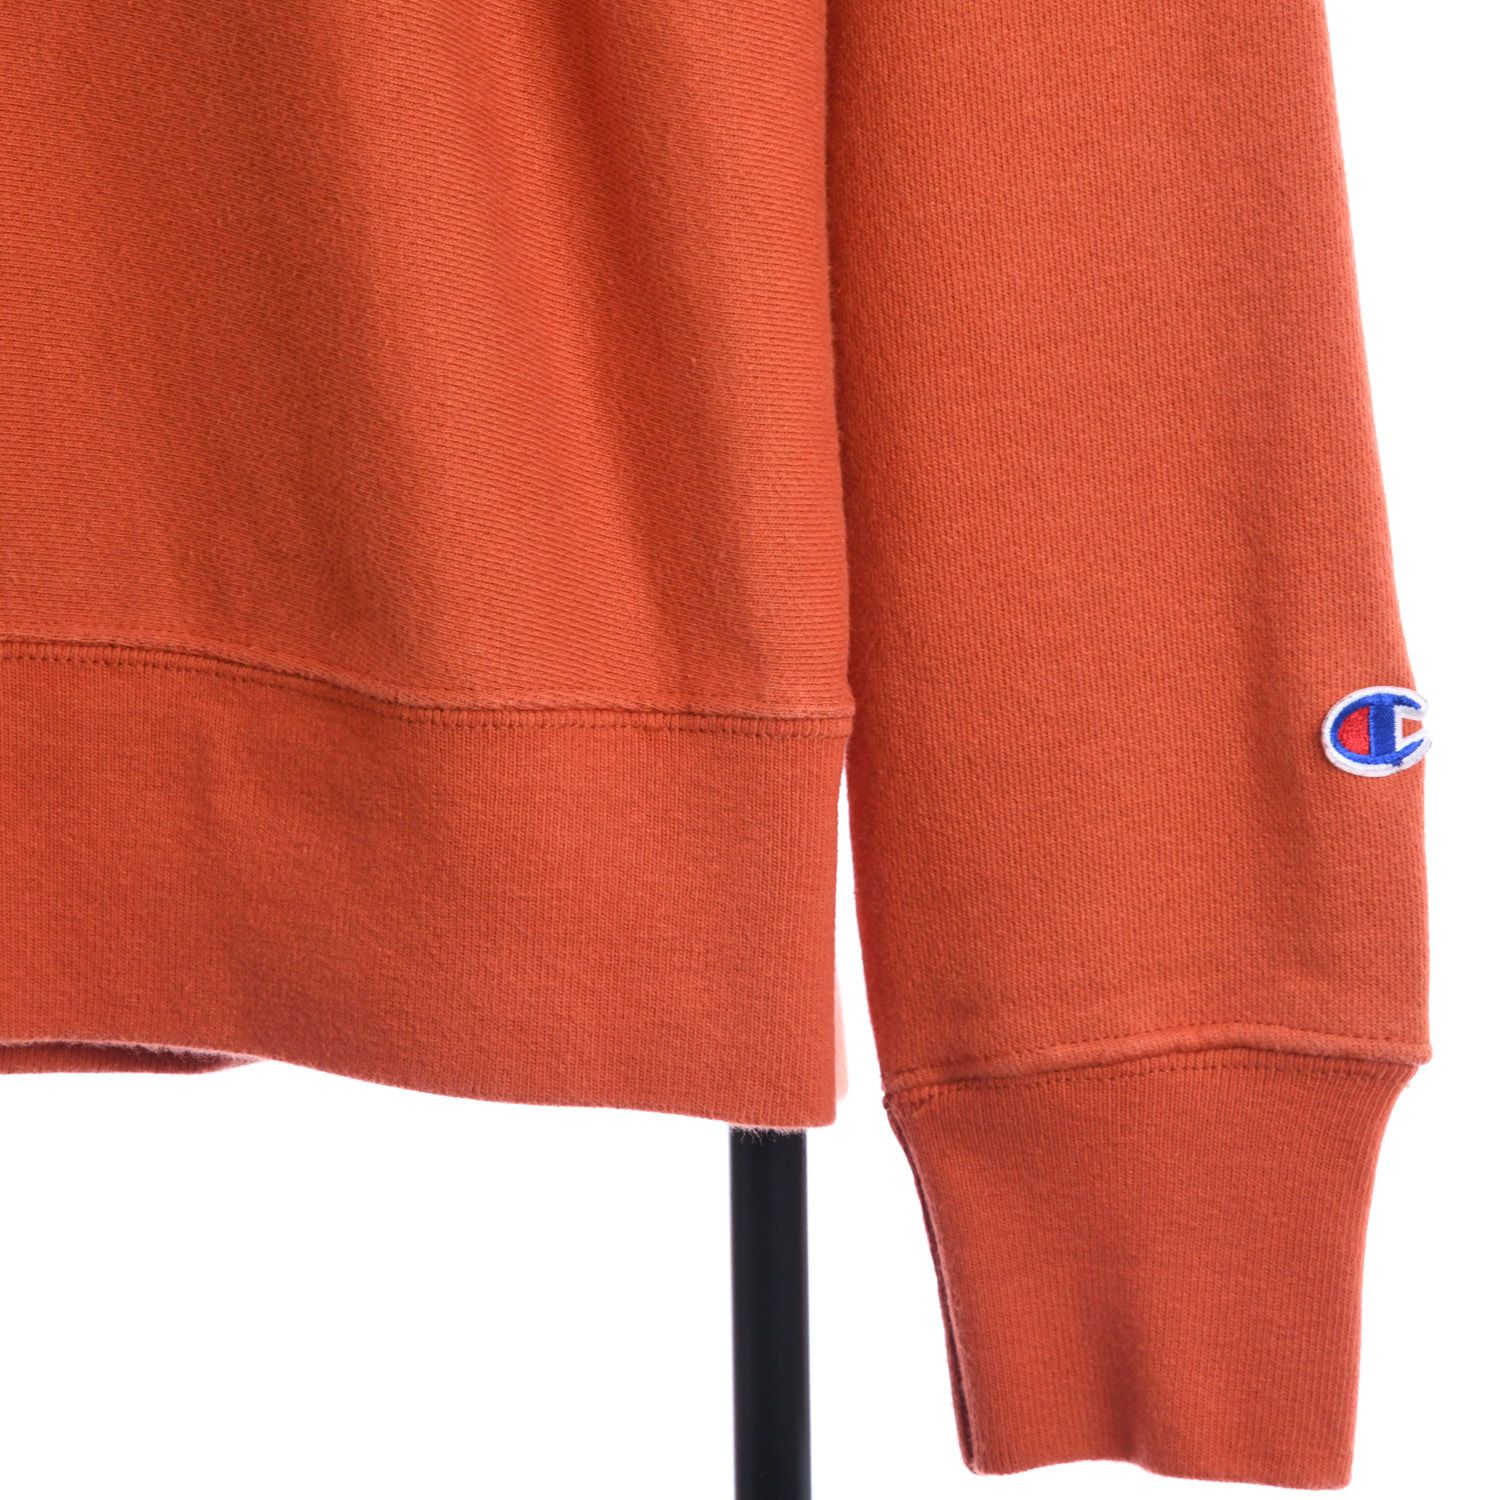 Champion Reverse Weave Orange Sweatshirt